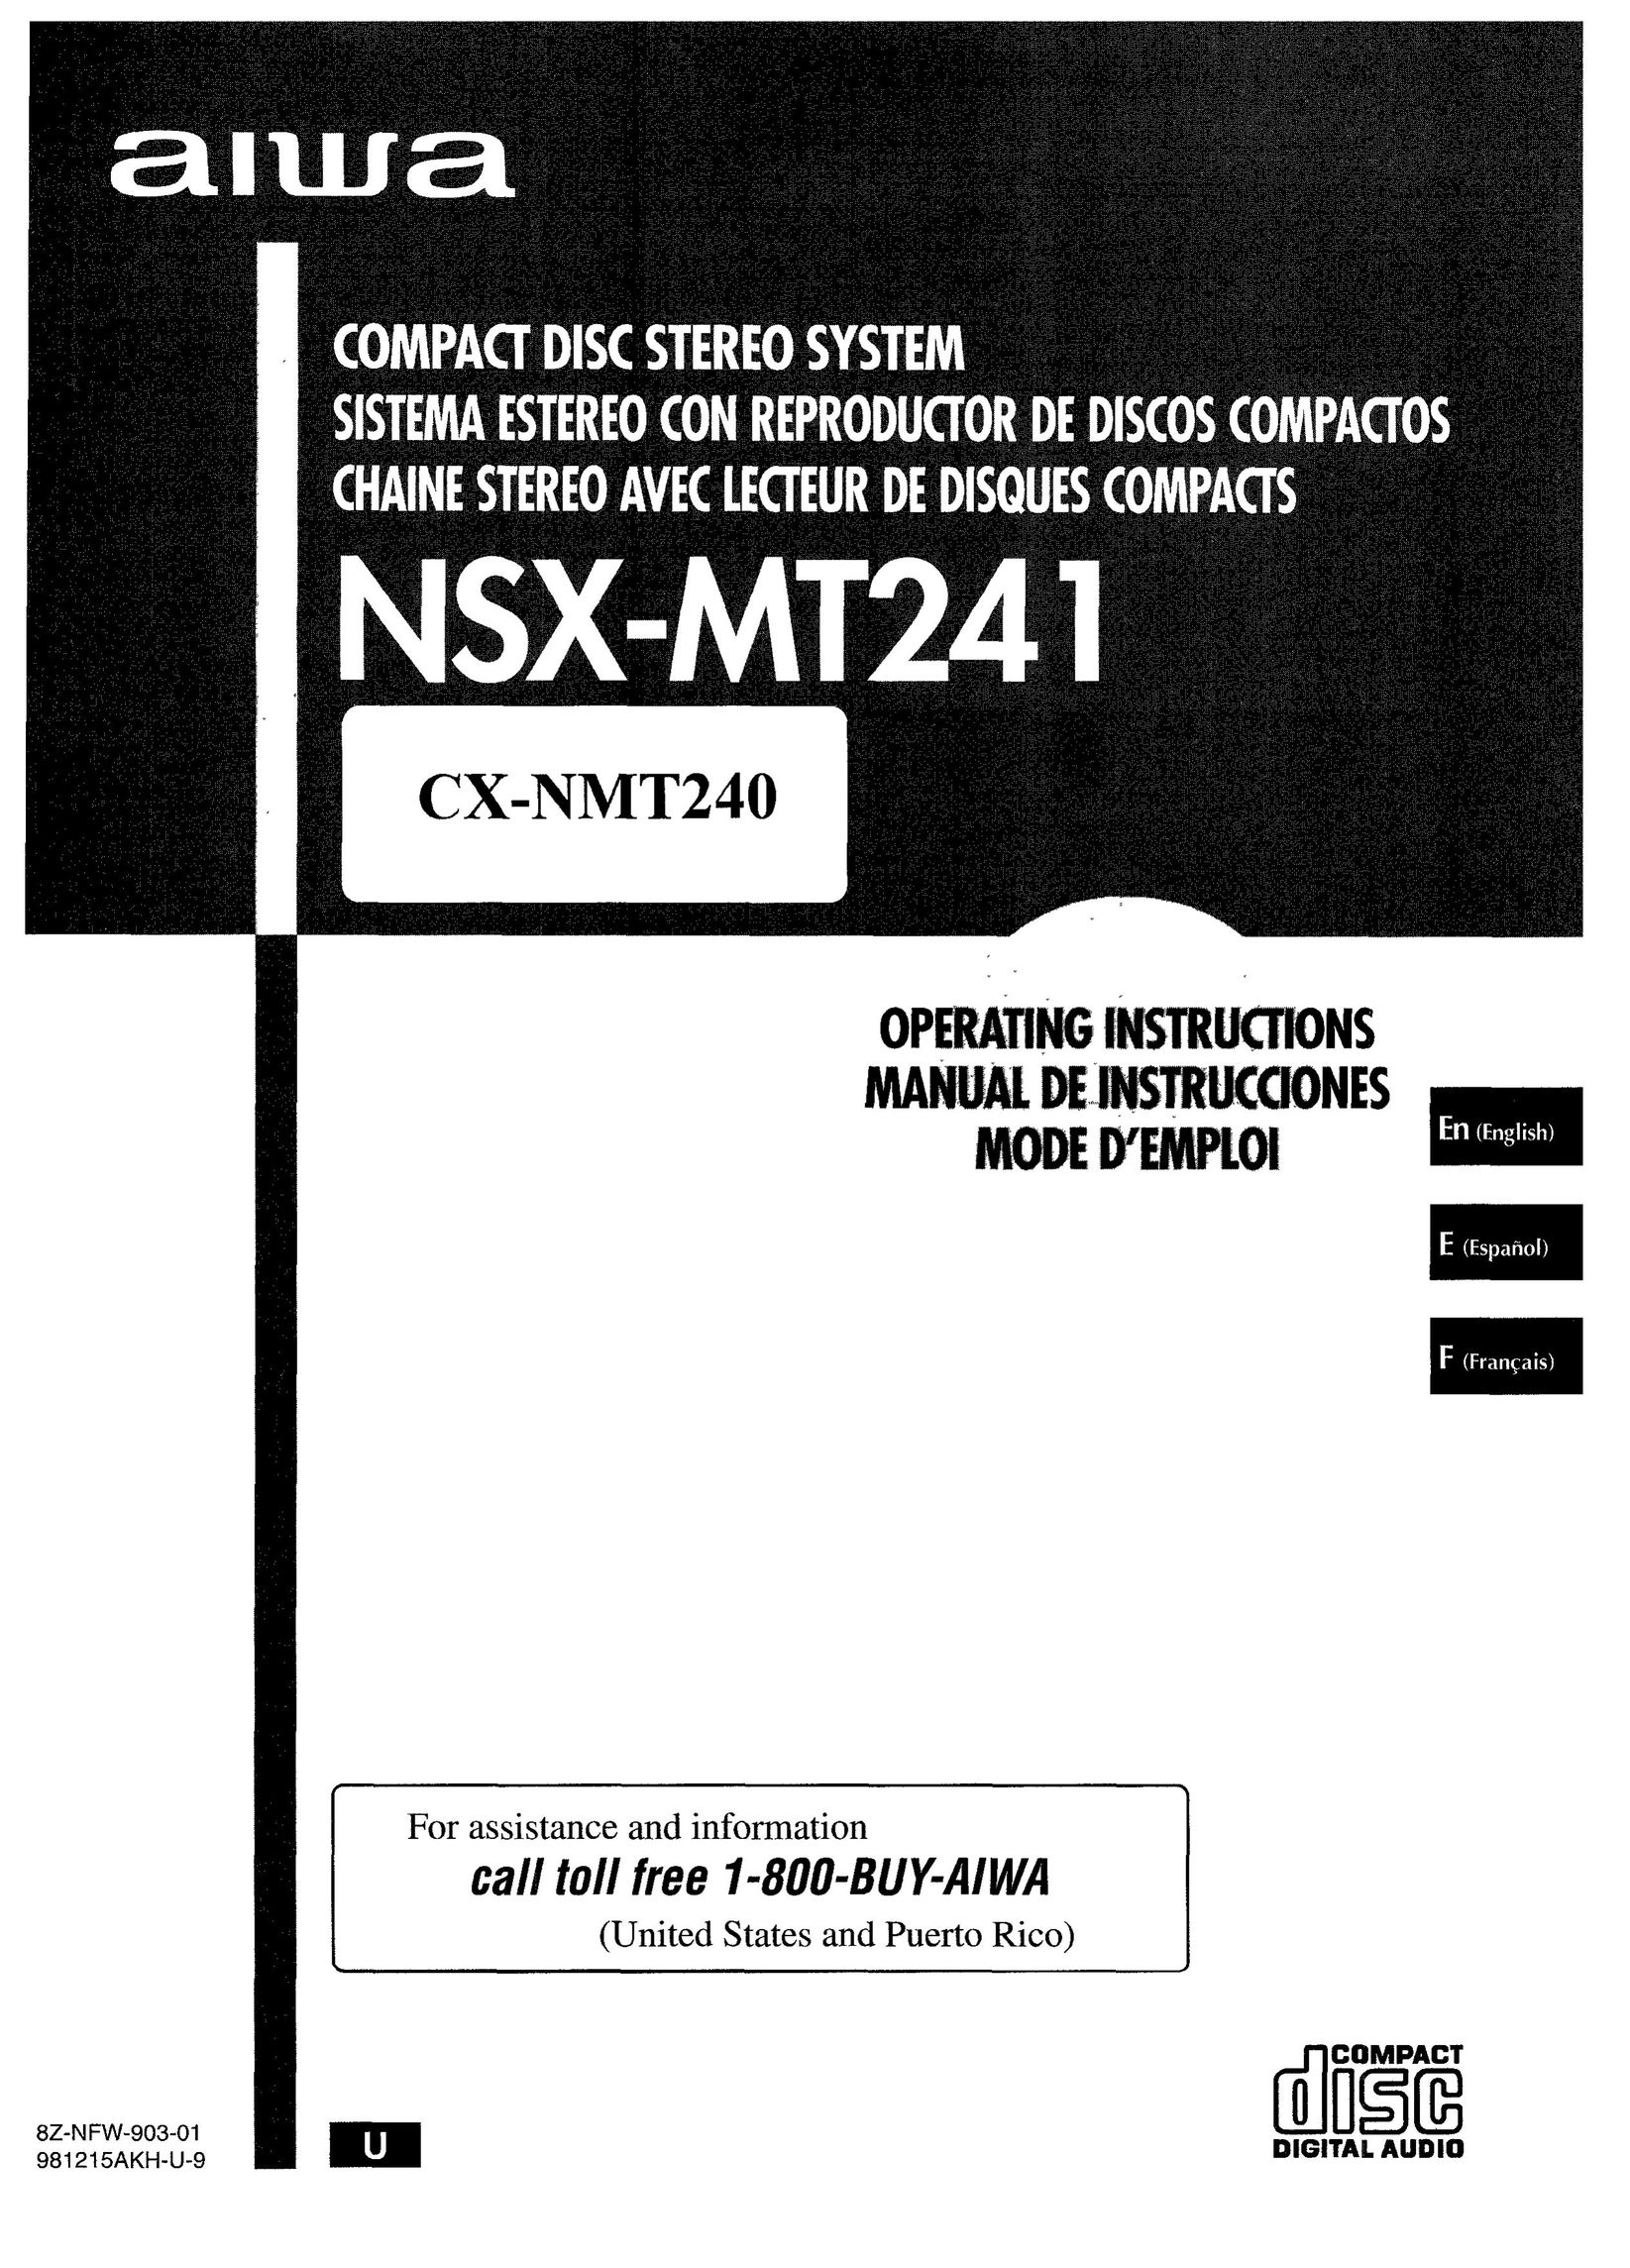 Aiwa CX-NMT240 CD Player User Manual